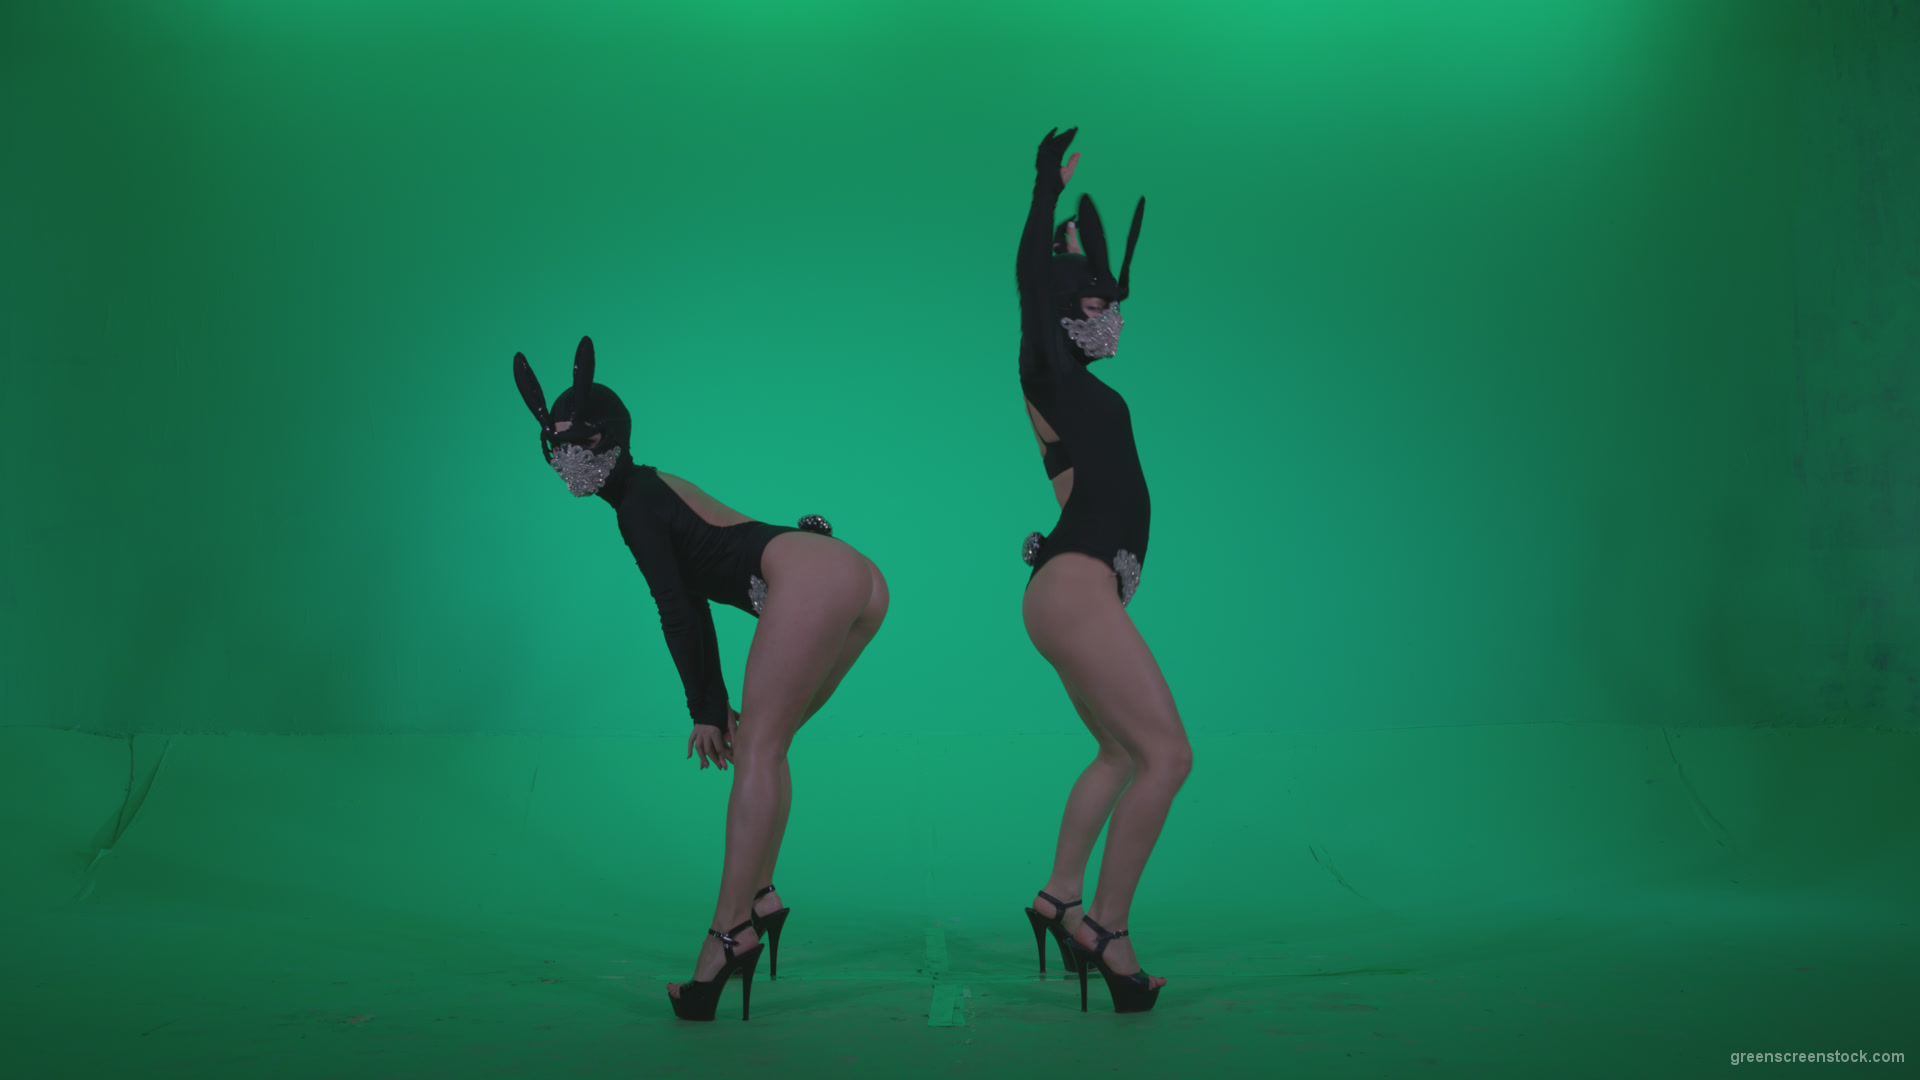 Go-go-Dancer-Black-Rabbit-u1-Green-Screen-Video-Footage_009 Green Screen Stock